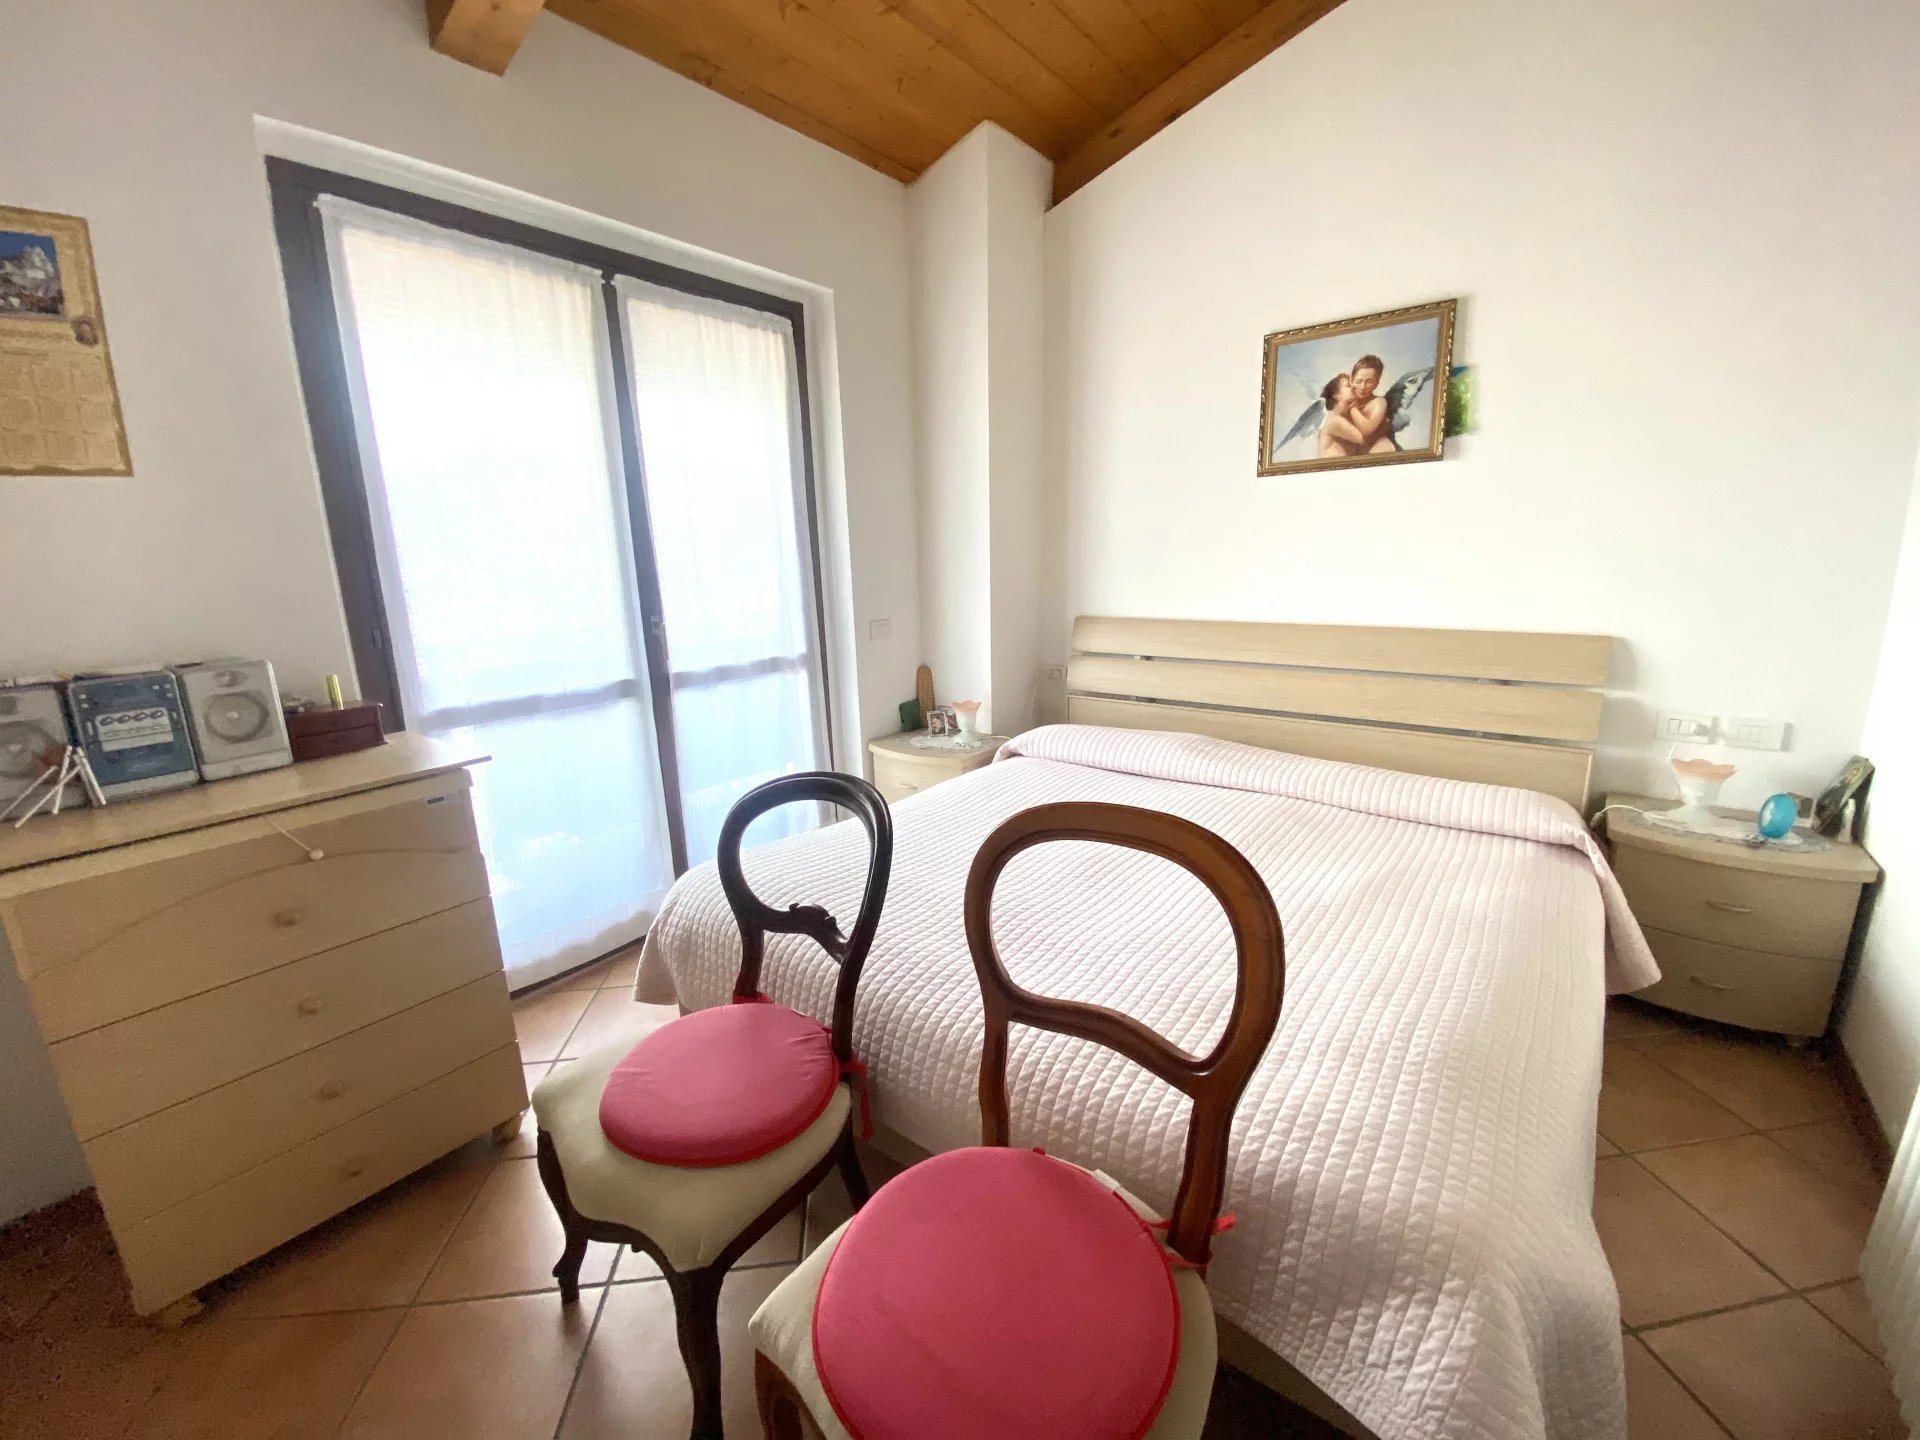 Sale Apartment - Alta Valle Intelvi - Italy